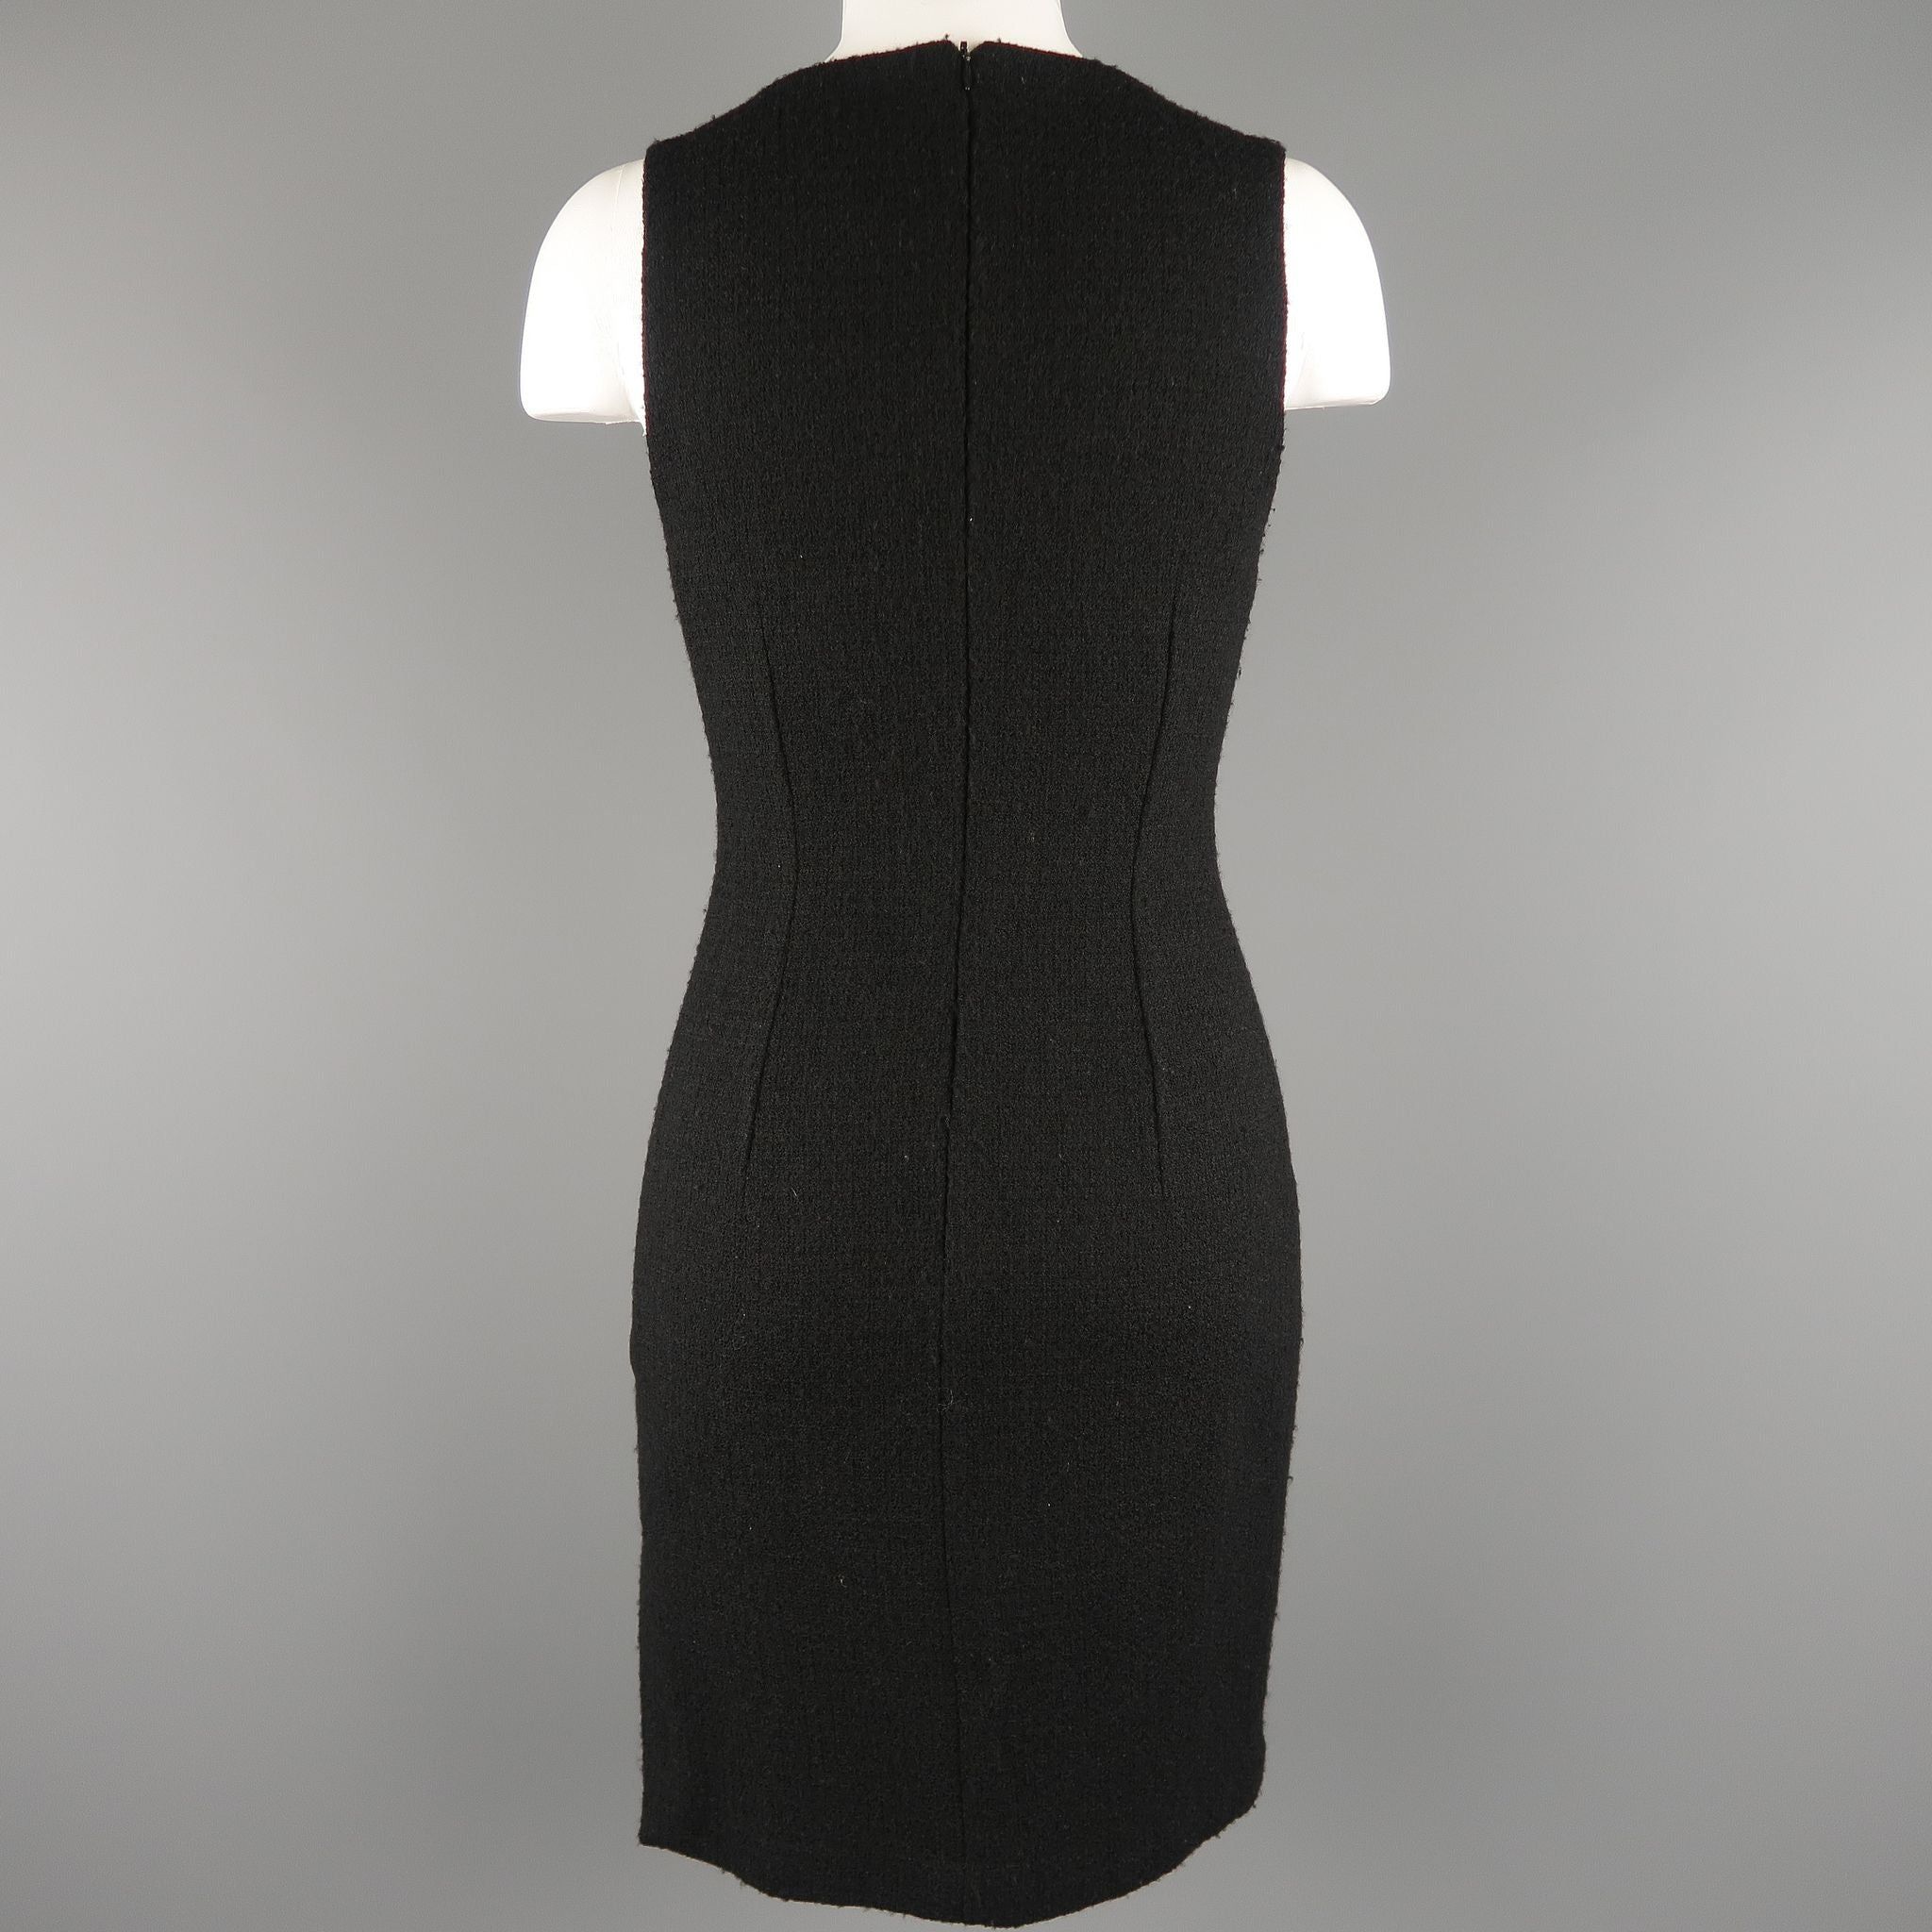 Versace Black Wool Blend Tweed Asymmetrical Dress Size S / US 4 / IT 40 - 4 Thumbnail